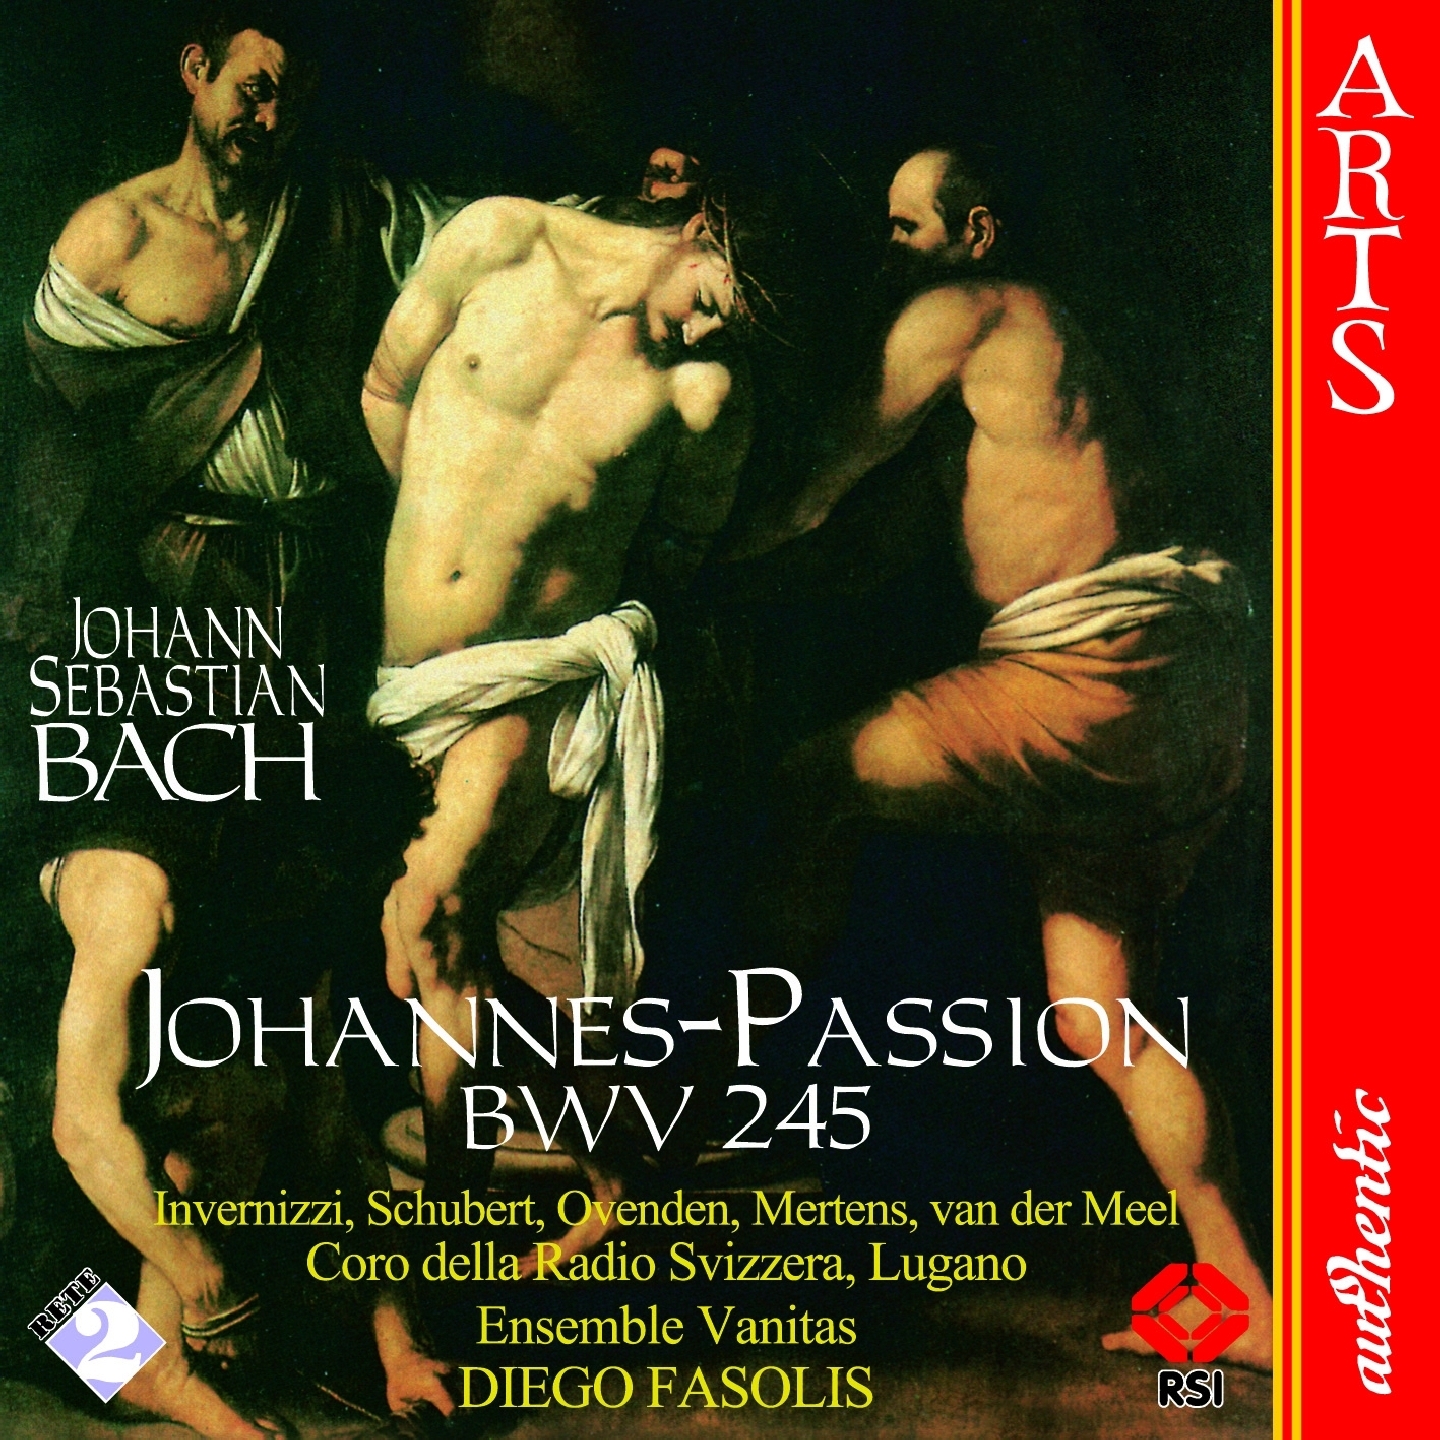 Johannes-Passion, BWV 245, Part I: 3. Choral "O grosse Lieb"